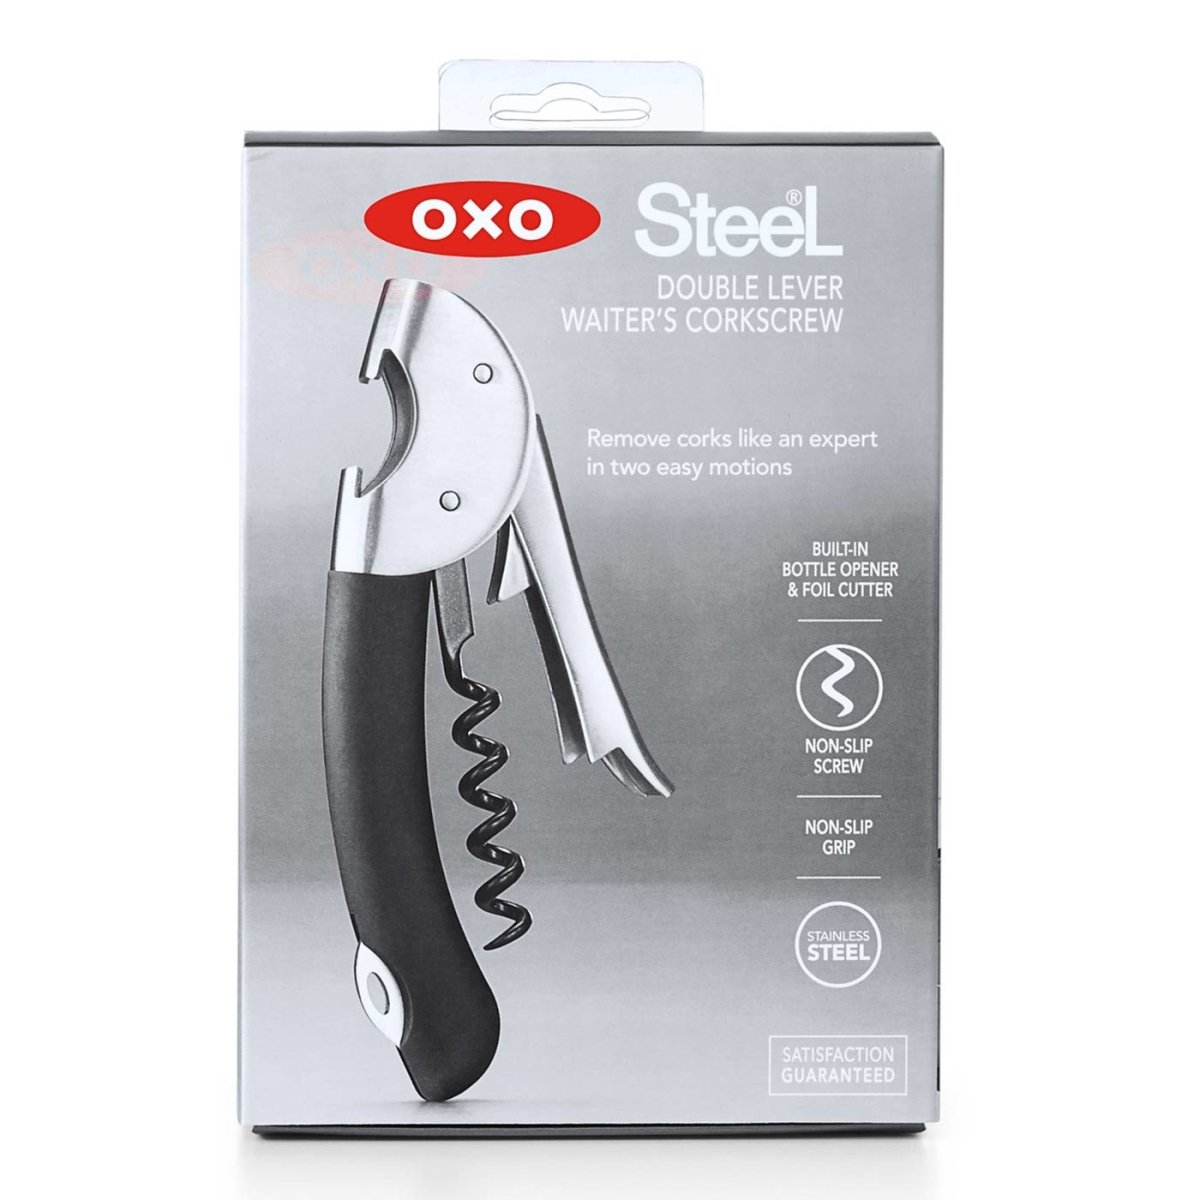 OXO SteeL Double Lever Waiter's Corkscrew